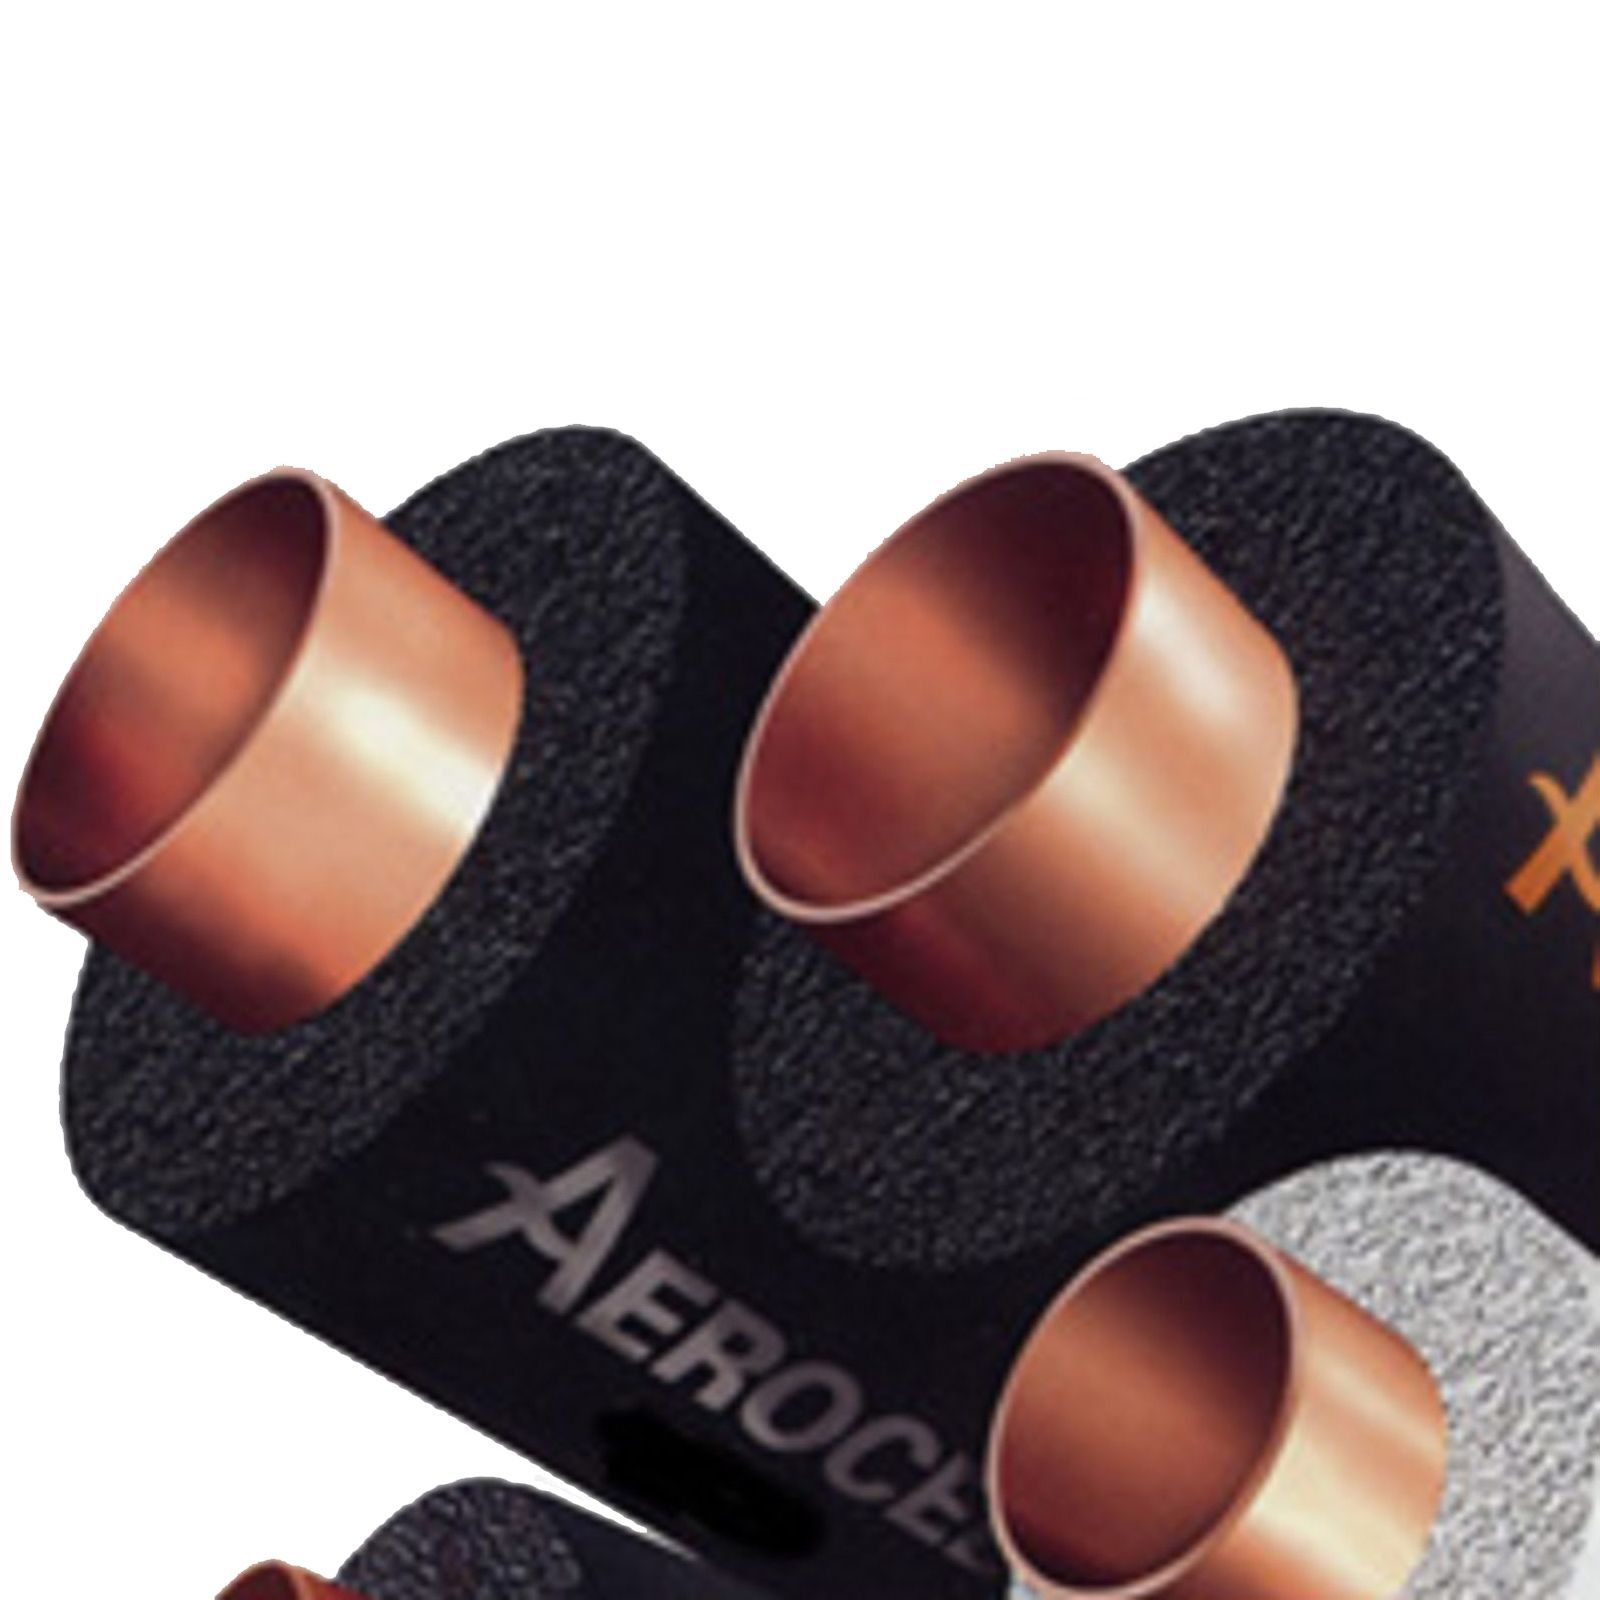 Aeroflex 306-AC3412 - EPDM Elastomeric Tubing Insulation, 3/4" ID X 1/2" Wall Thickness, Fits 3/4" OD Tubing